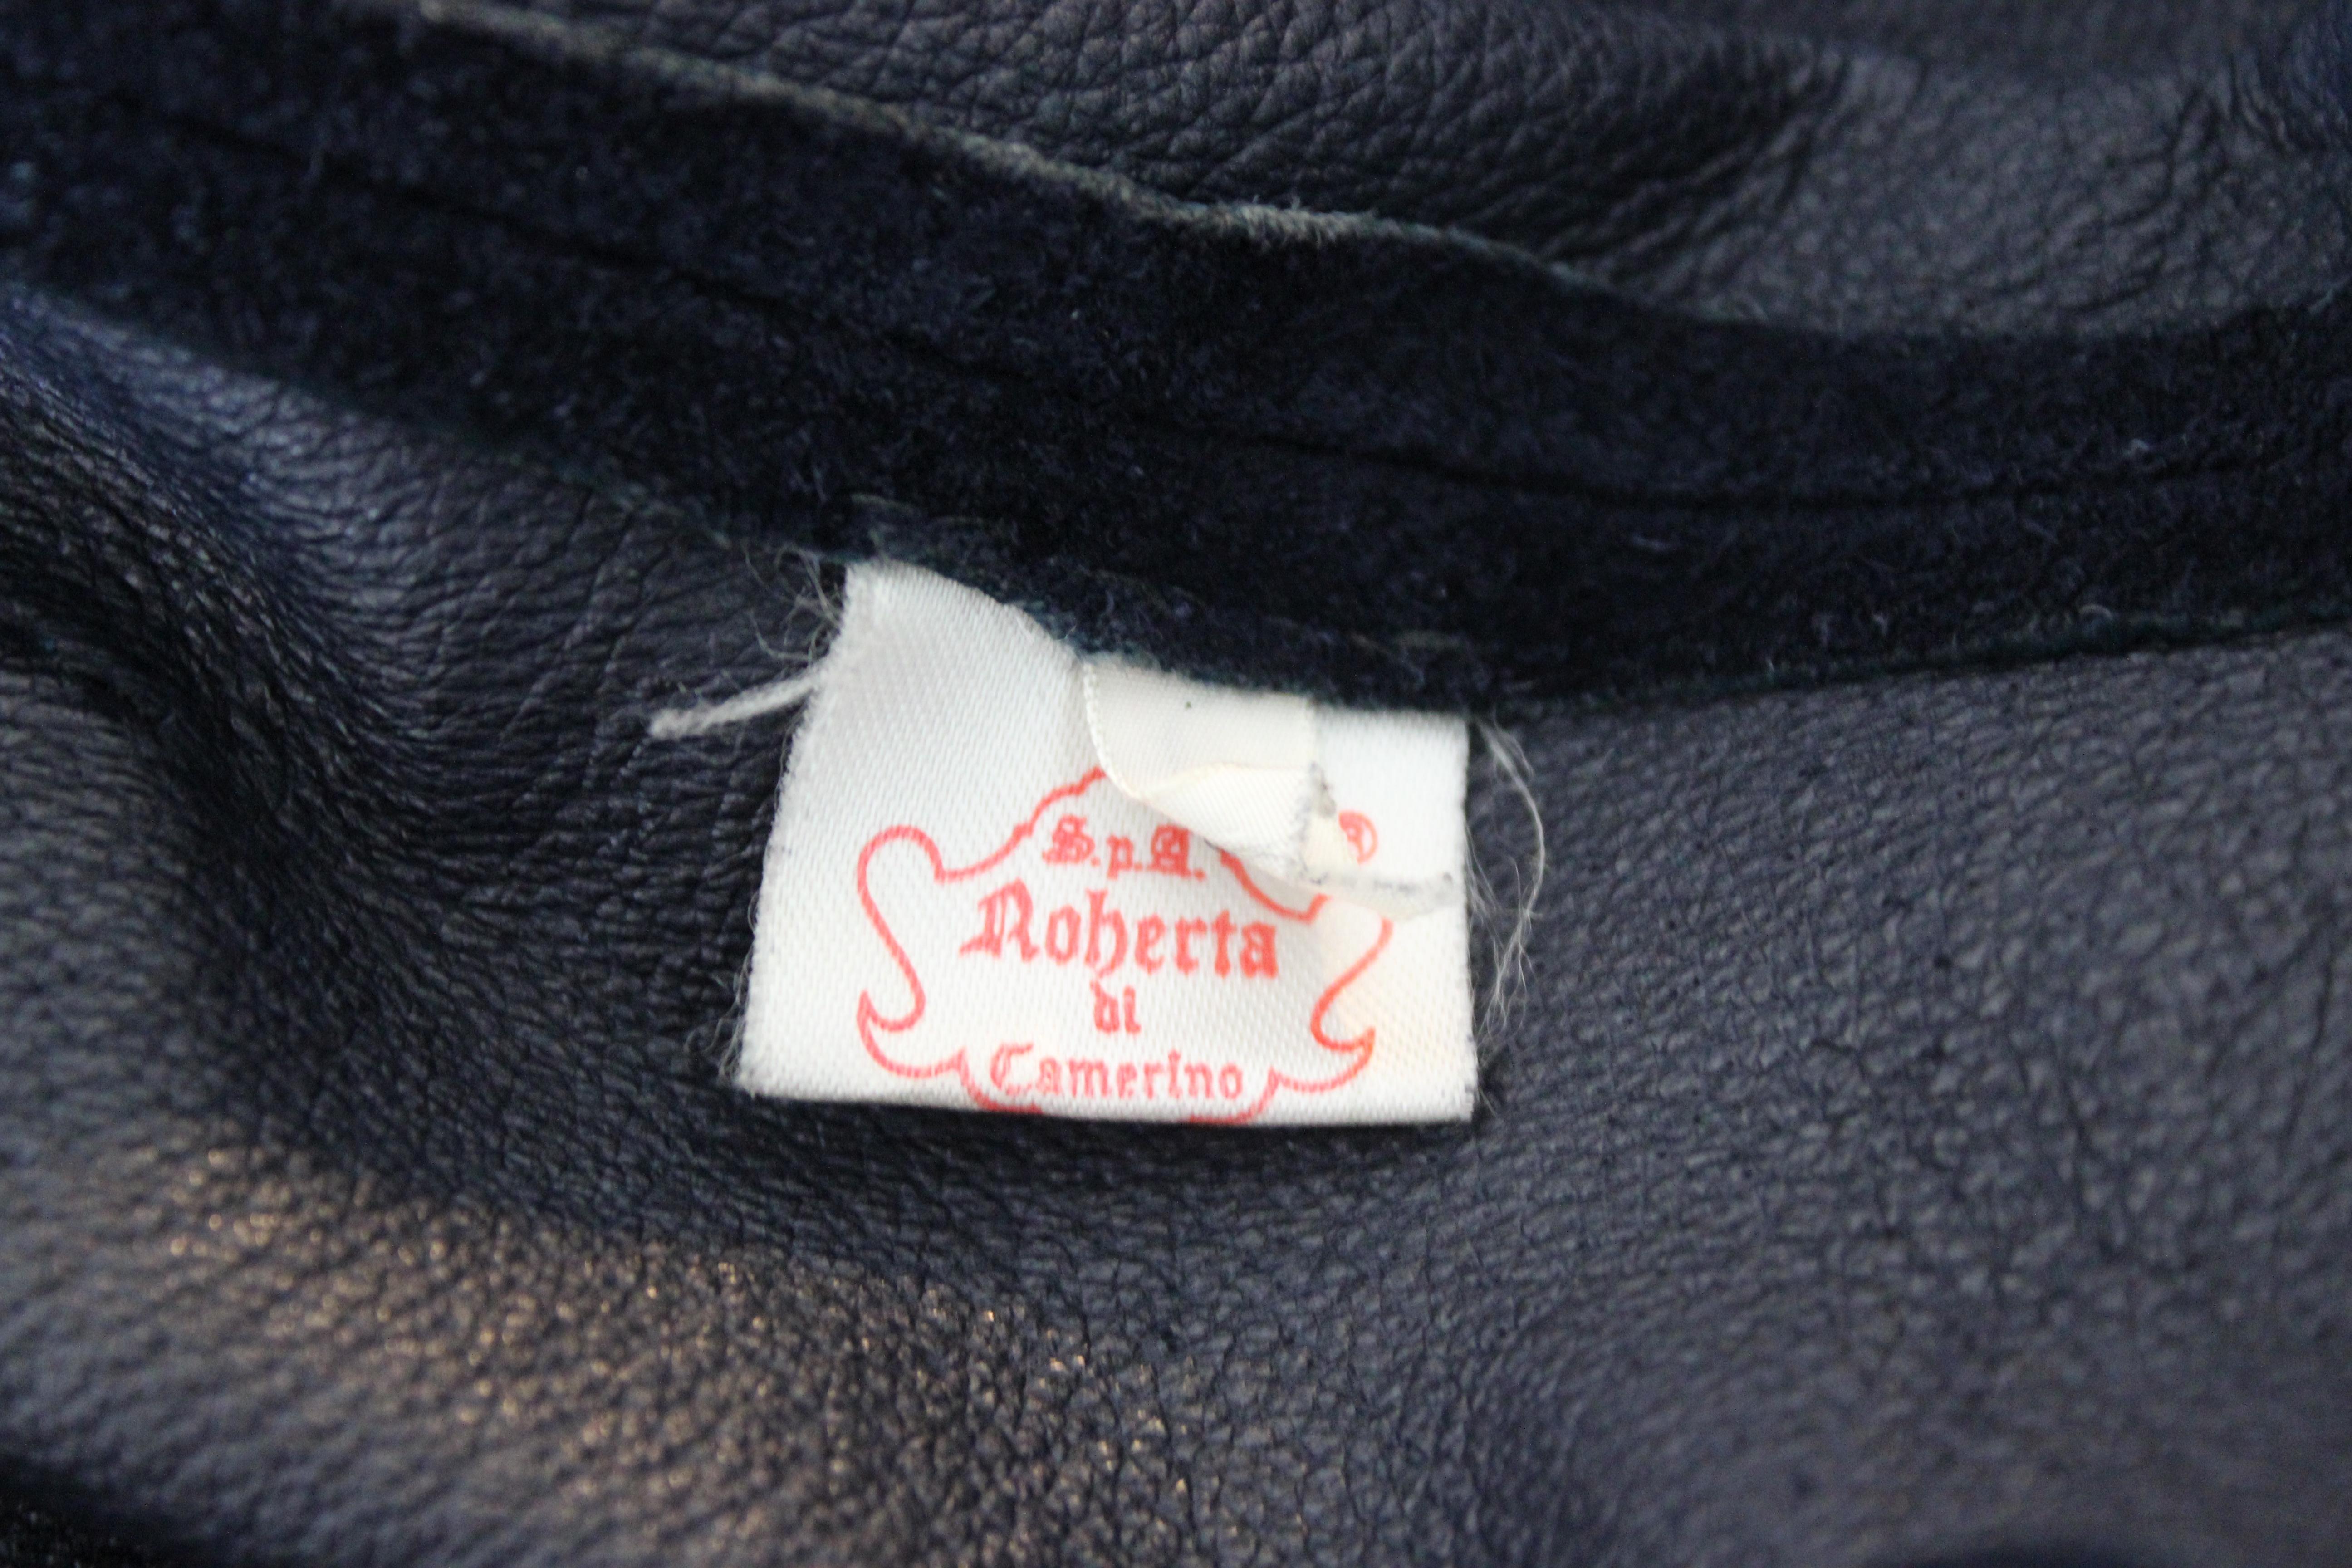 Roberta di Camerino Blu Leather Suede Jacket 1980s 1